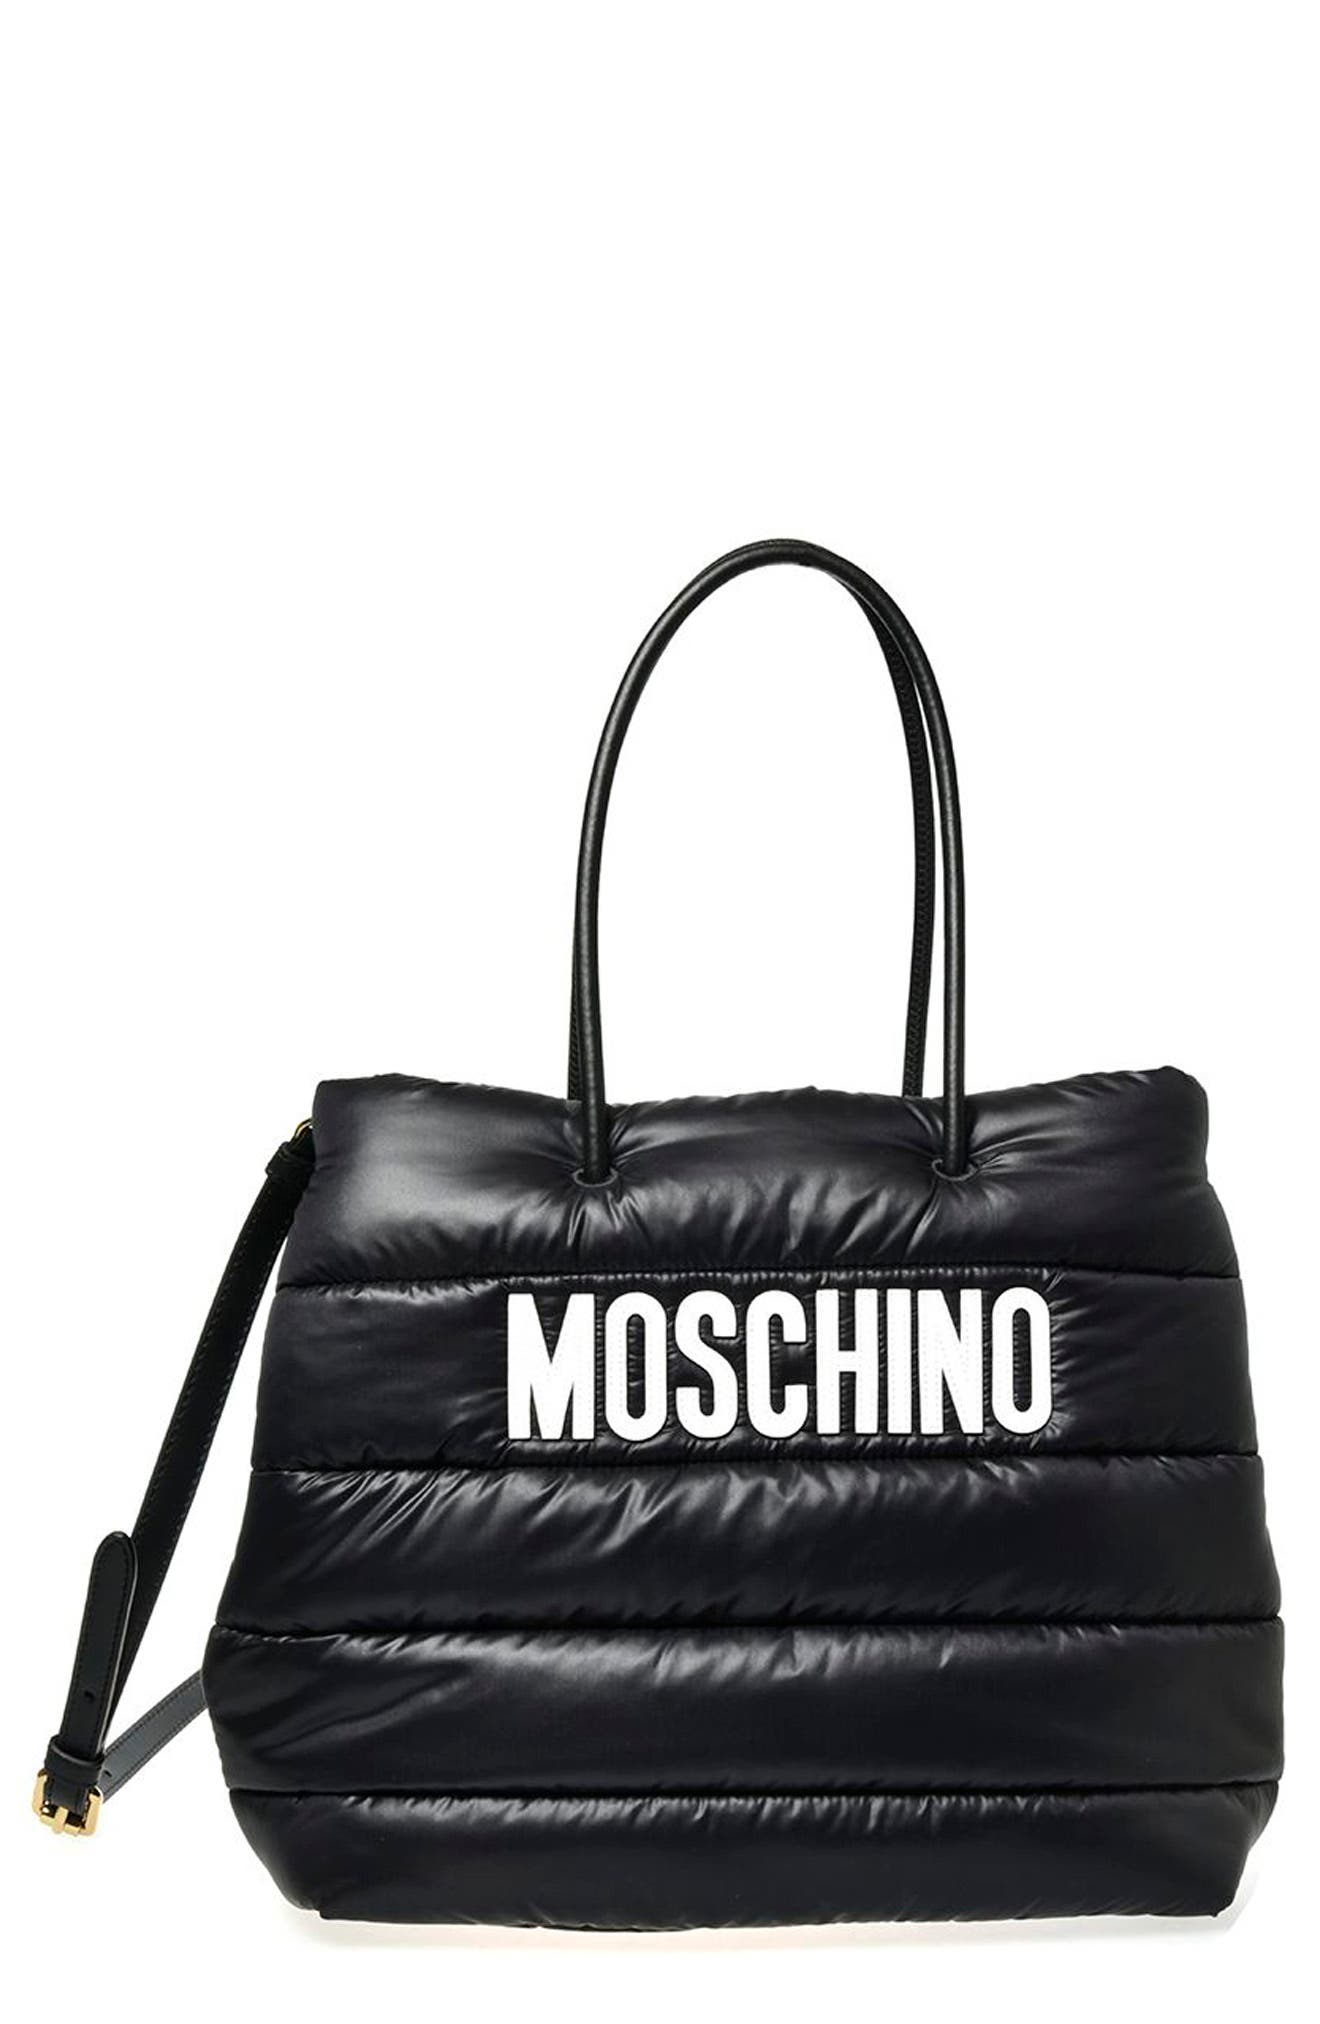 moschino black bag